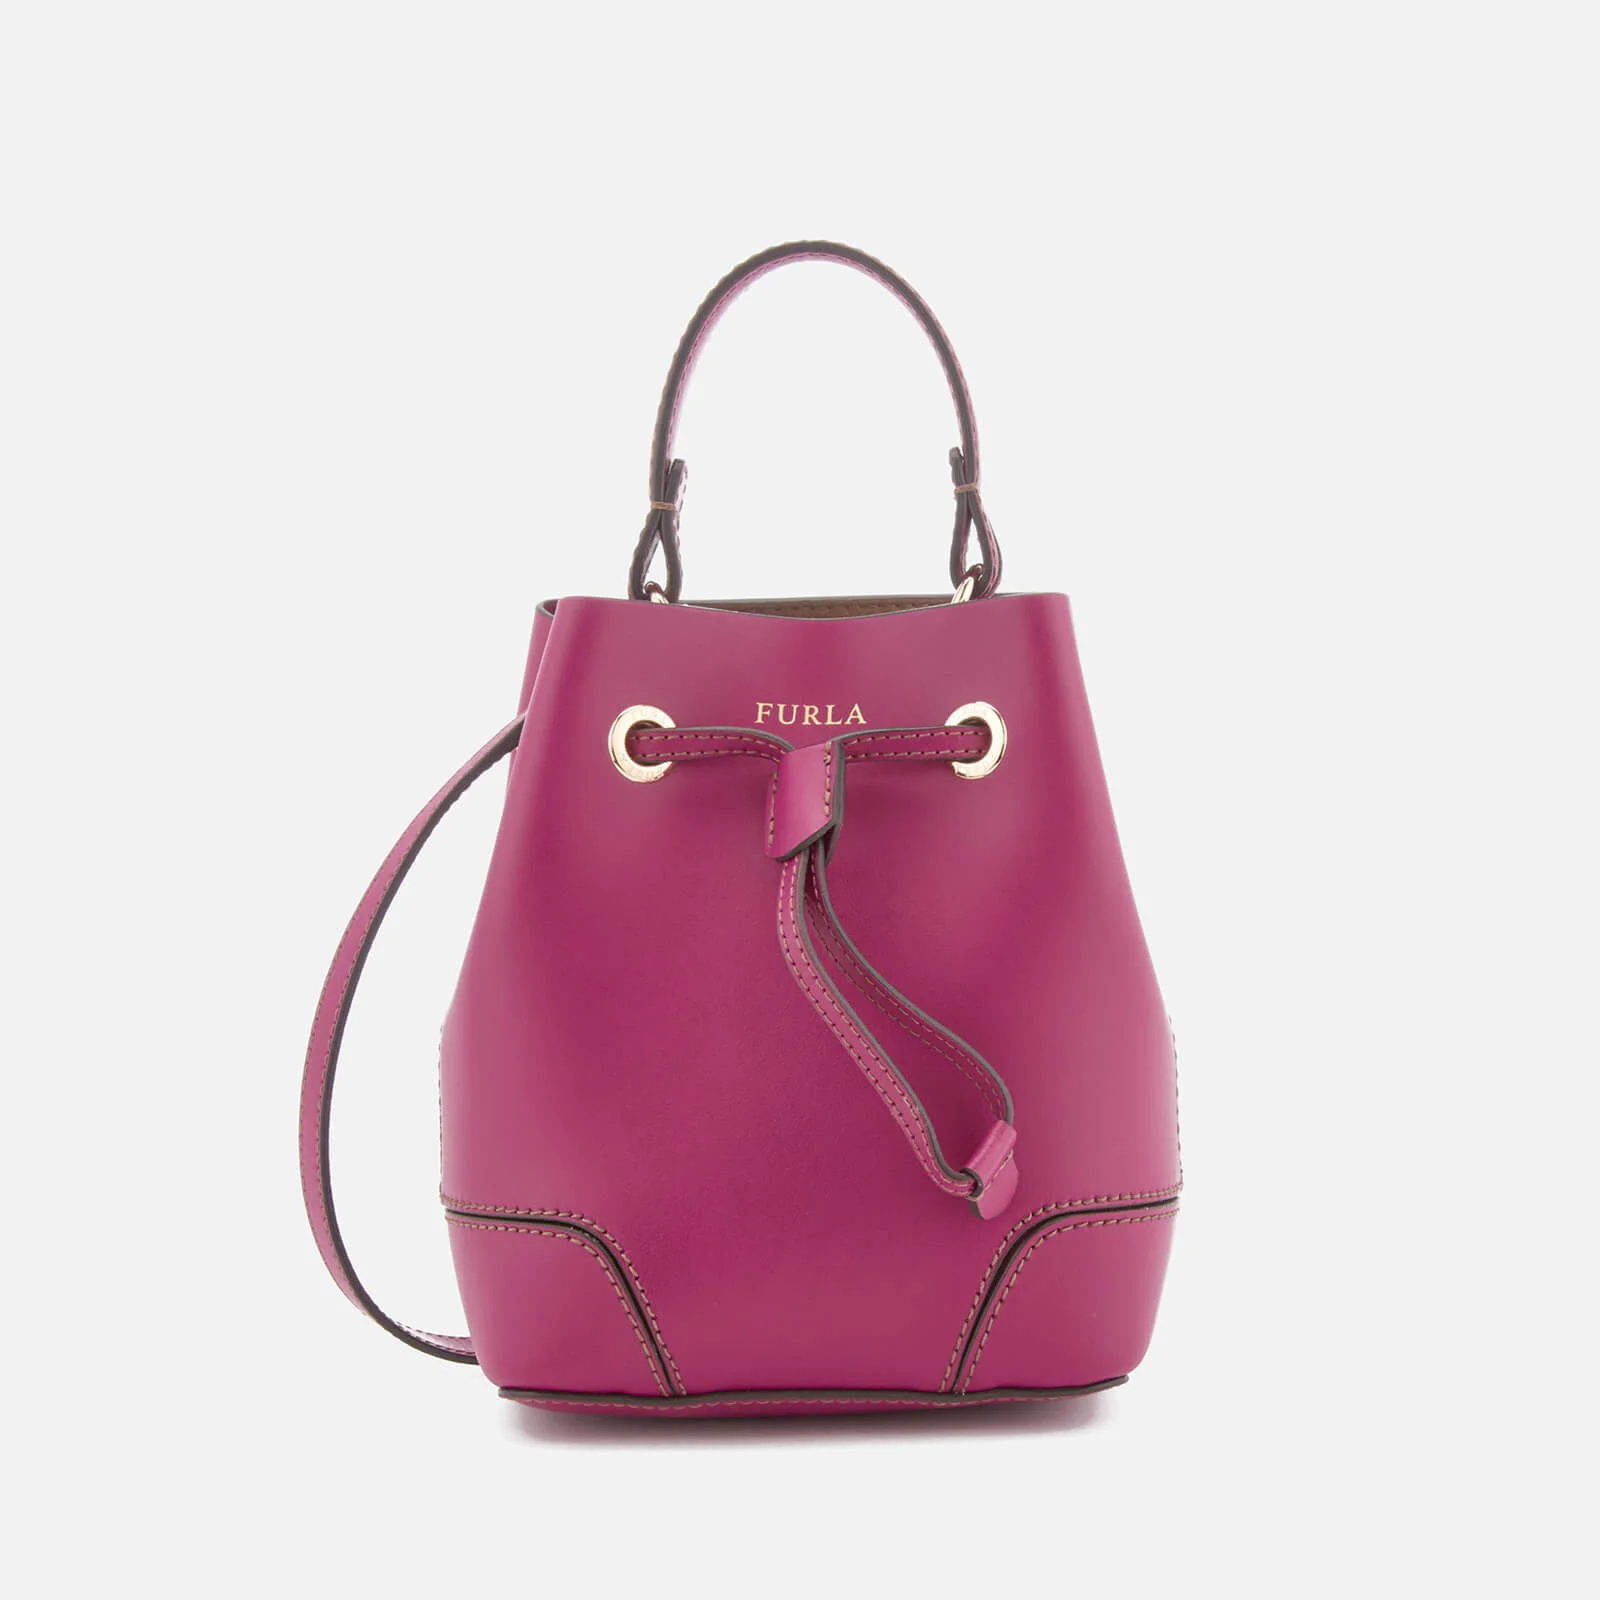 Furla Women's Stacy Mini Drawstring Bag - Pink Image 1